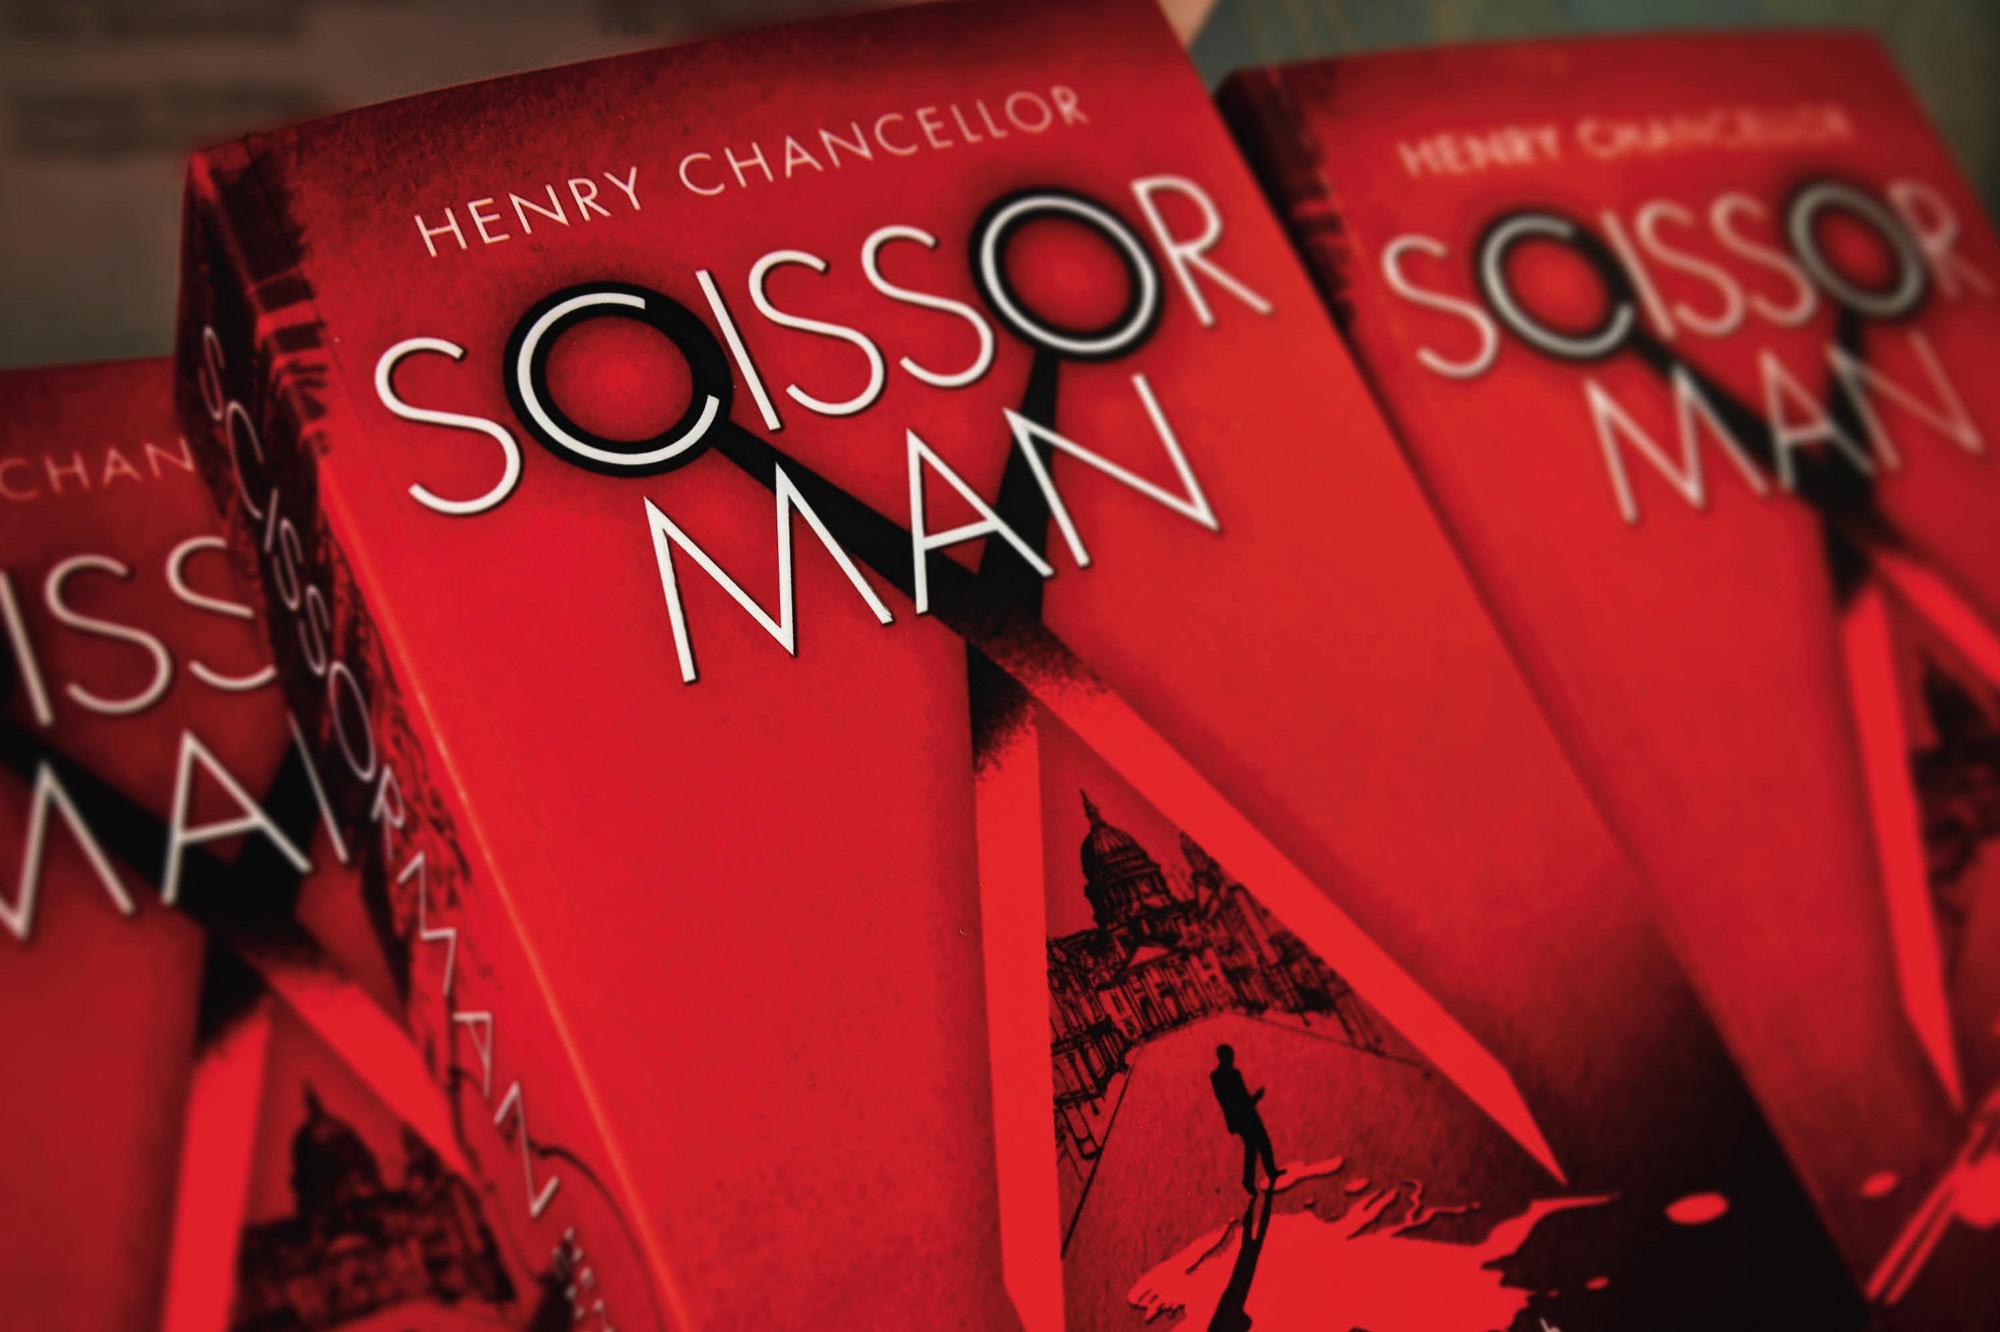 Scissorman book cover design